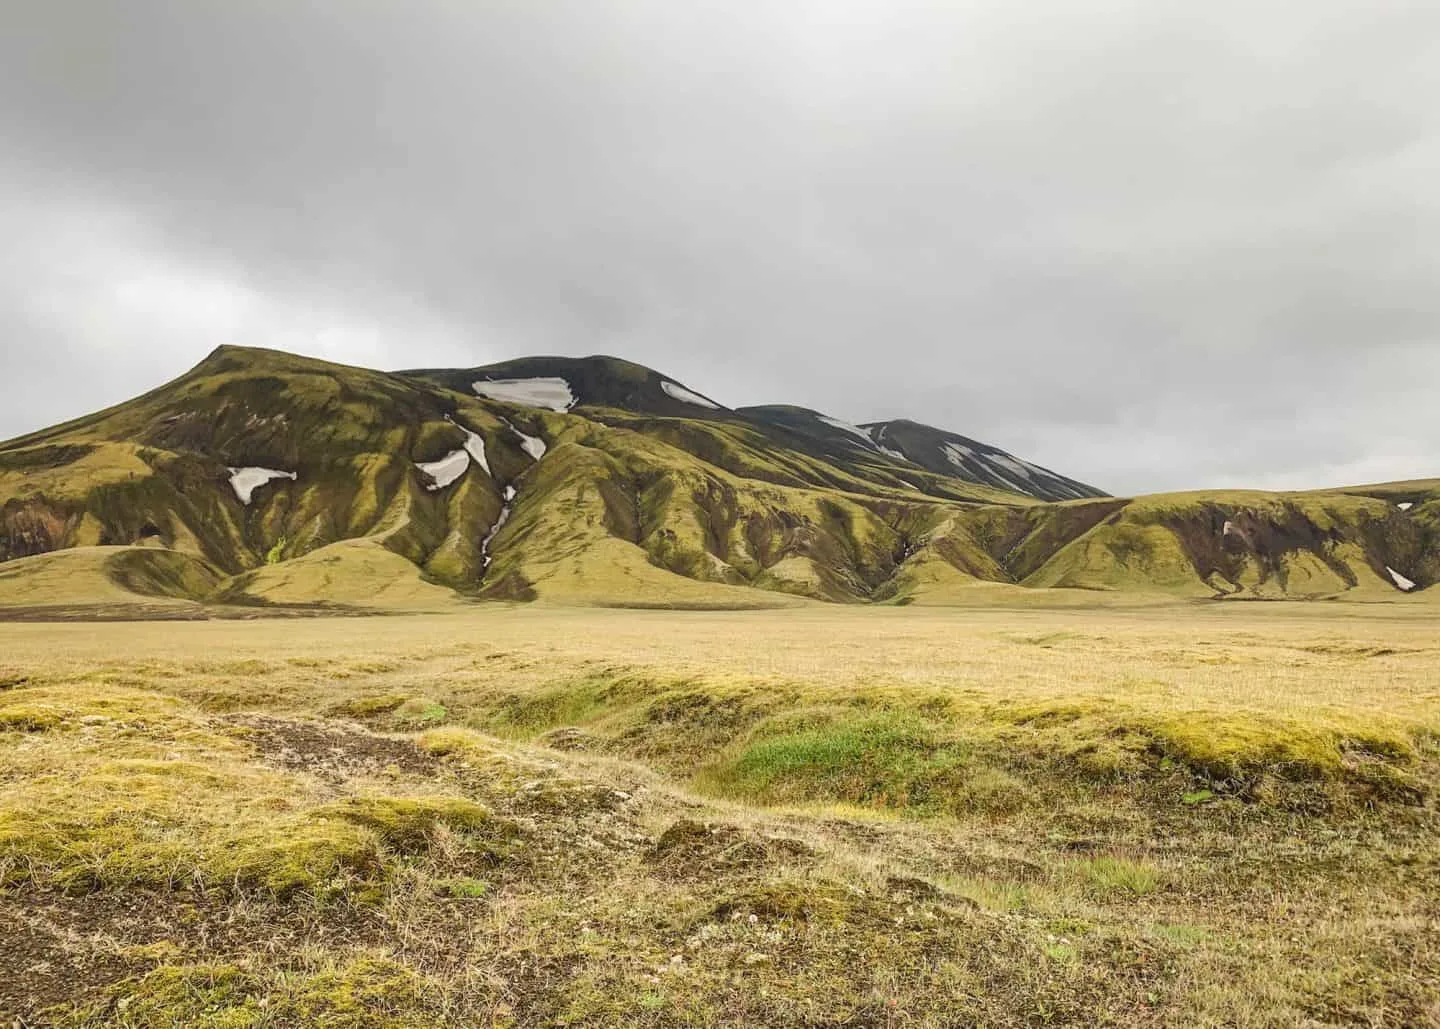 Landmannalaugar campsite in Icelandic Highlands